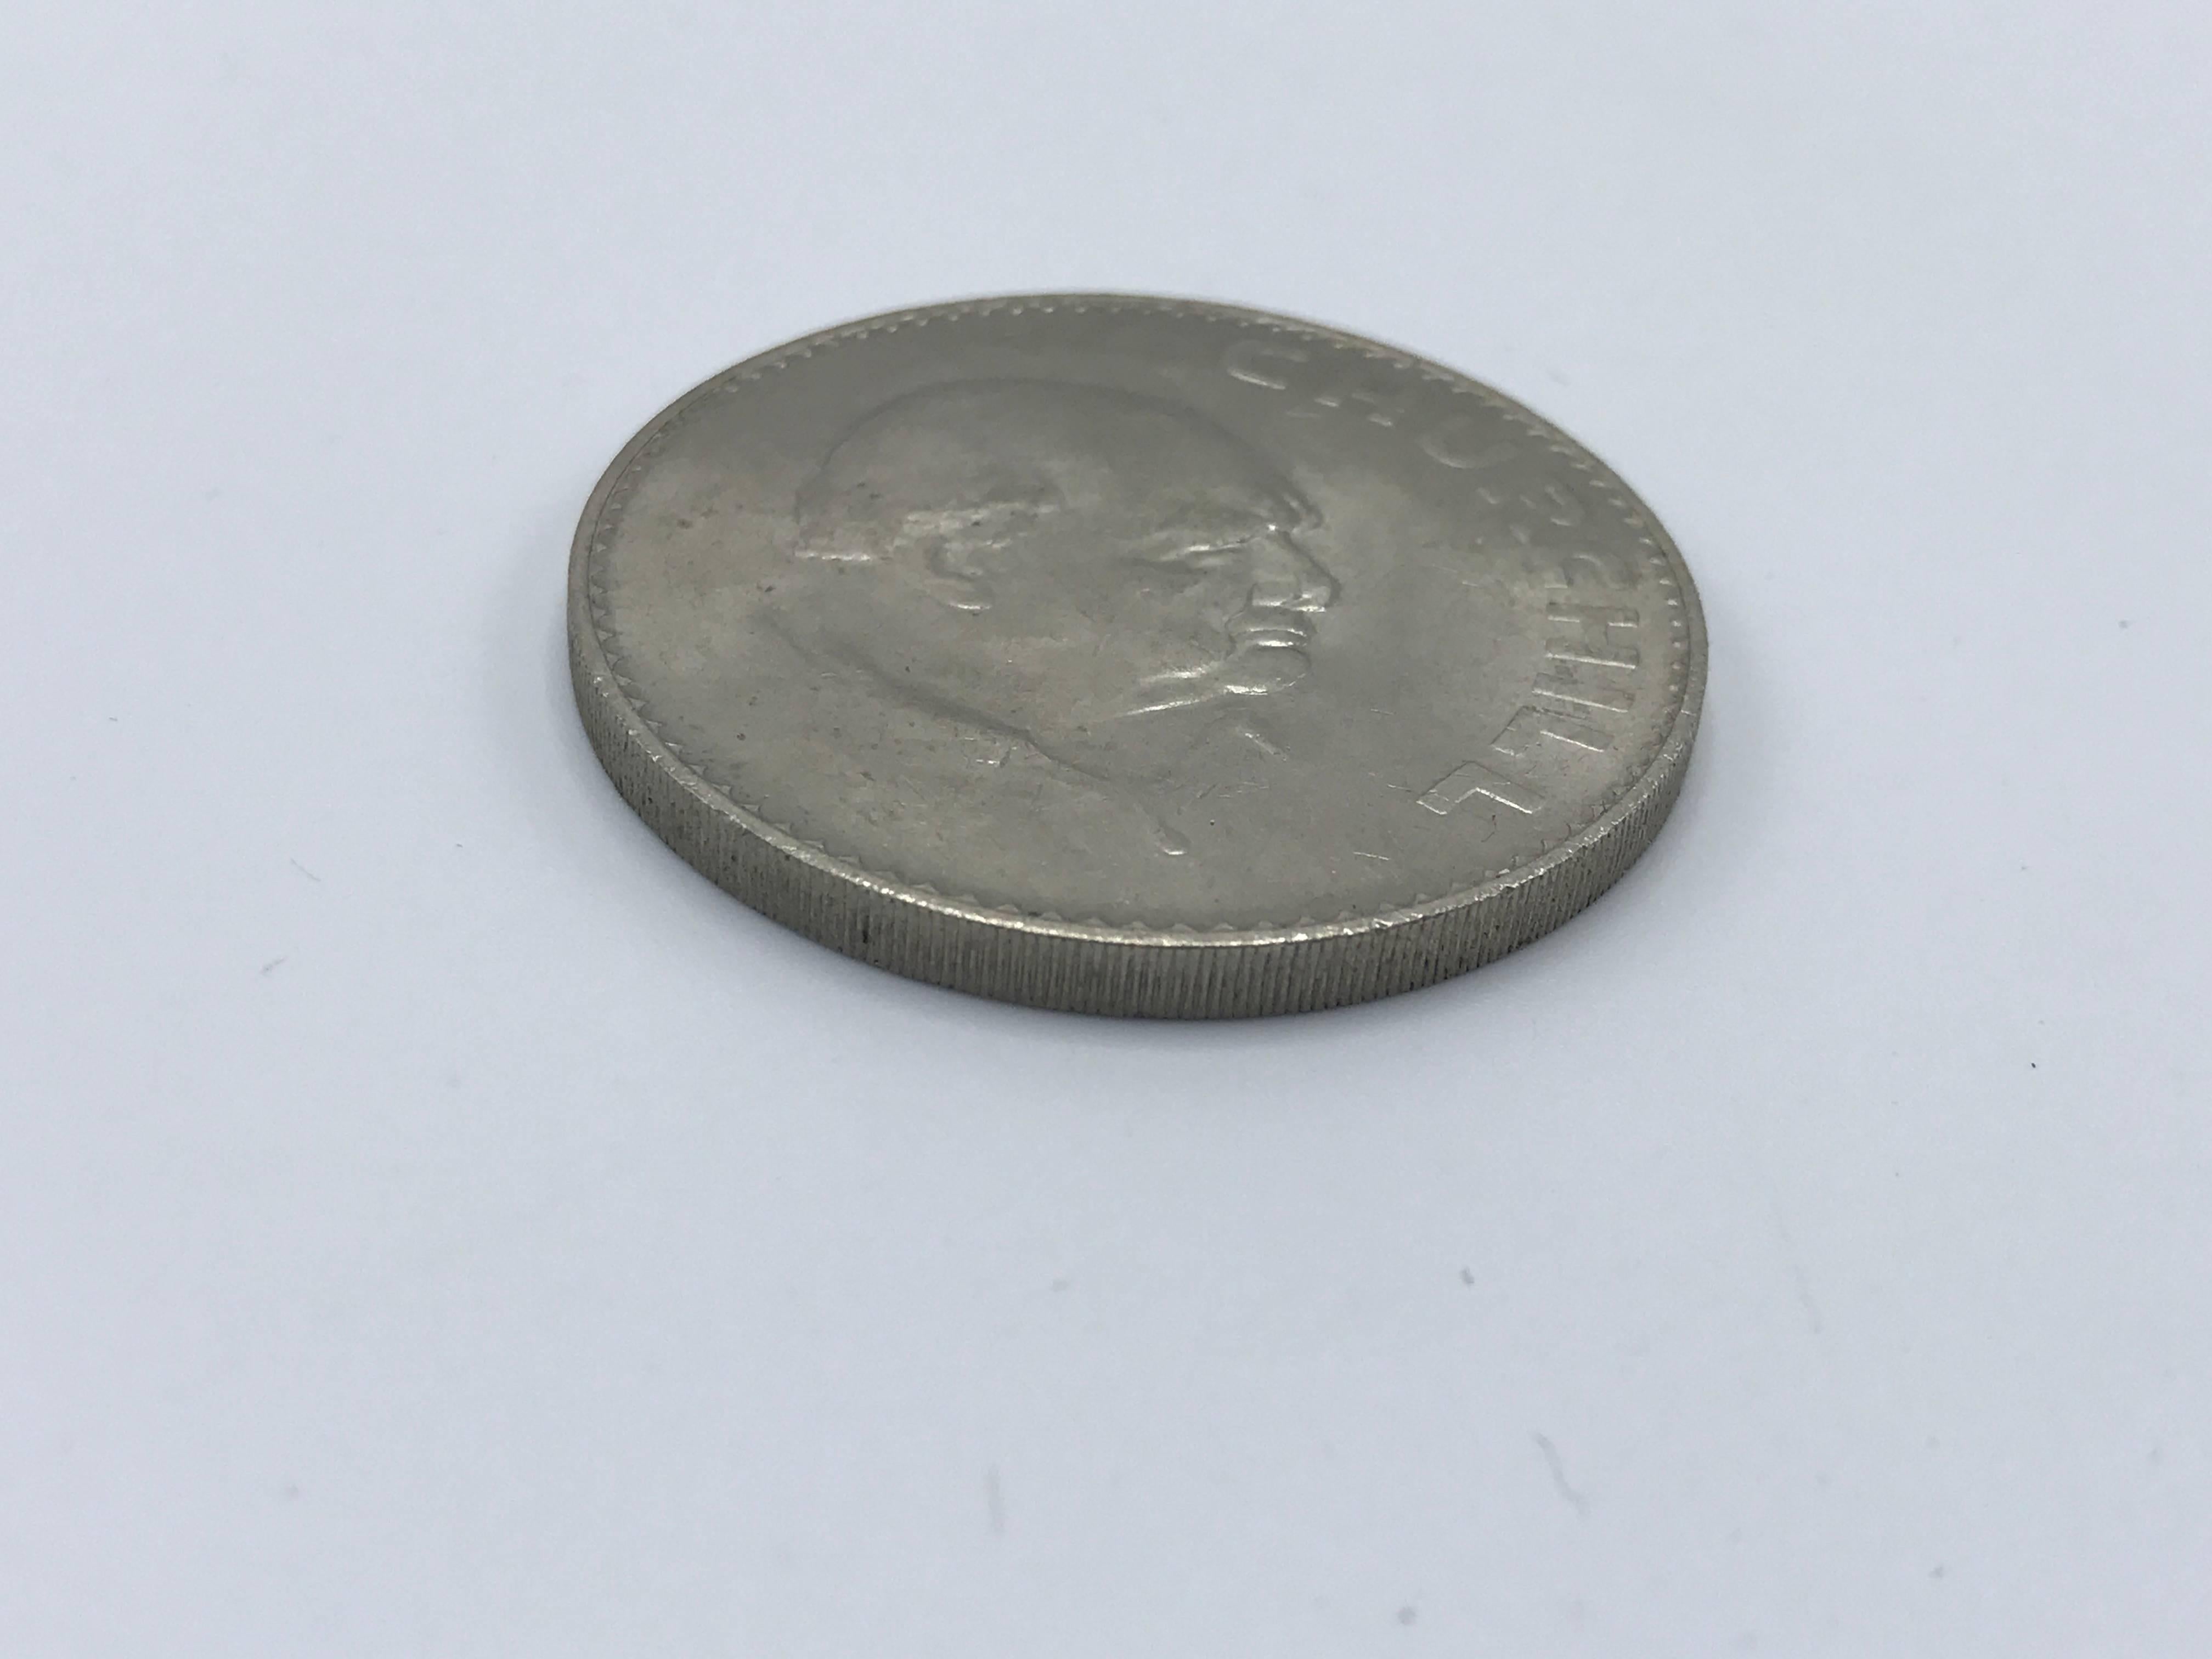 1965 elizabeth ii coin